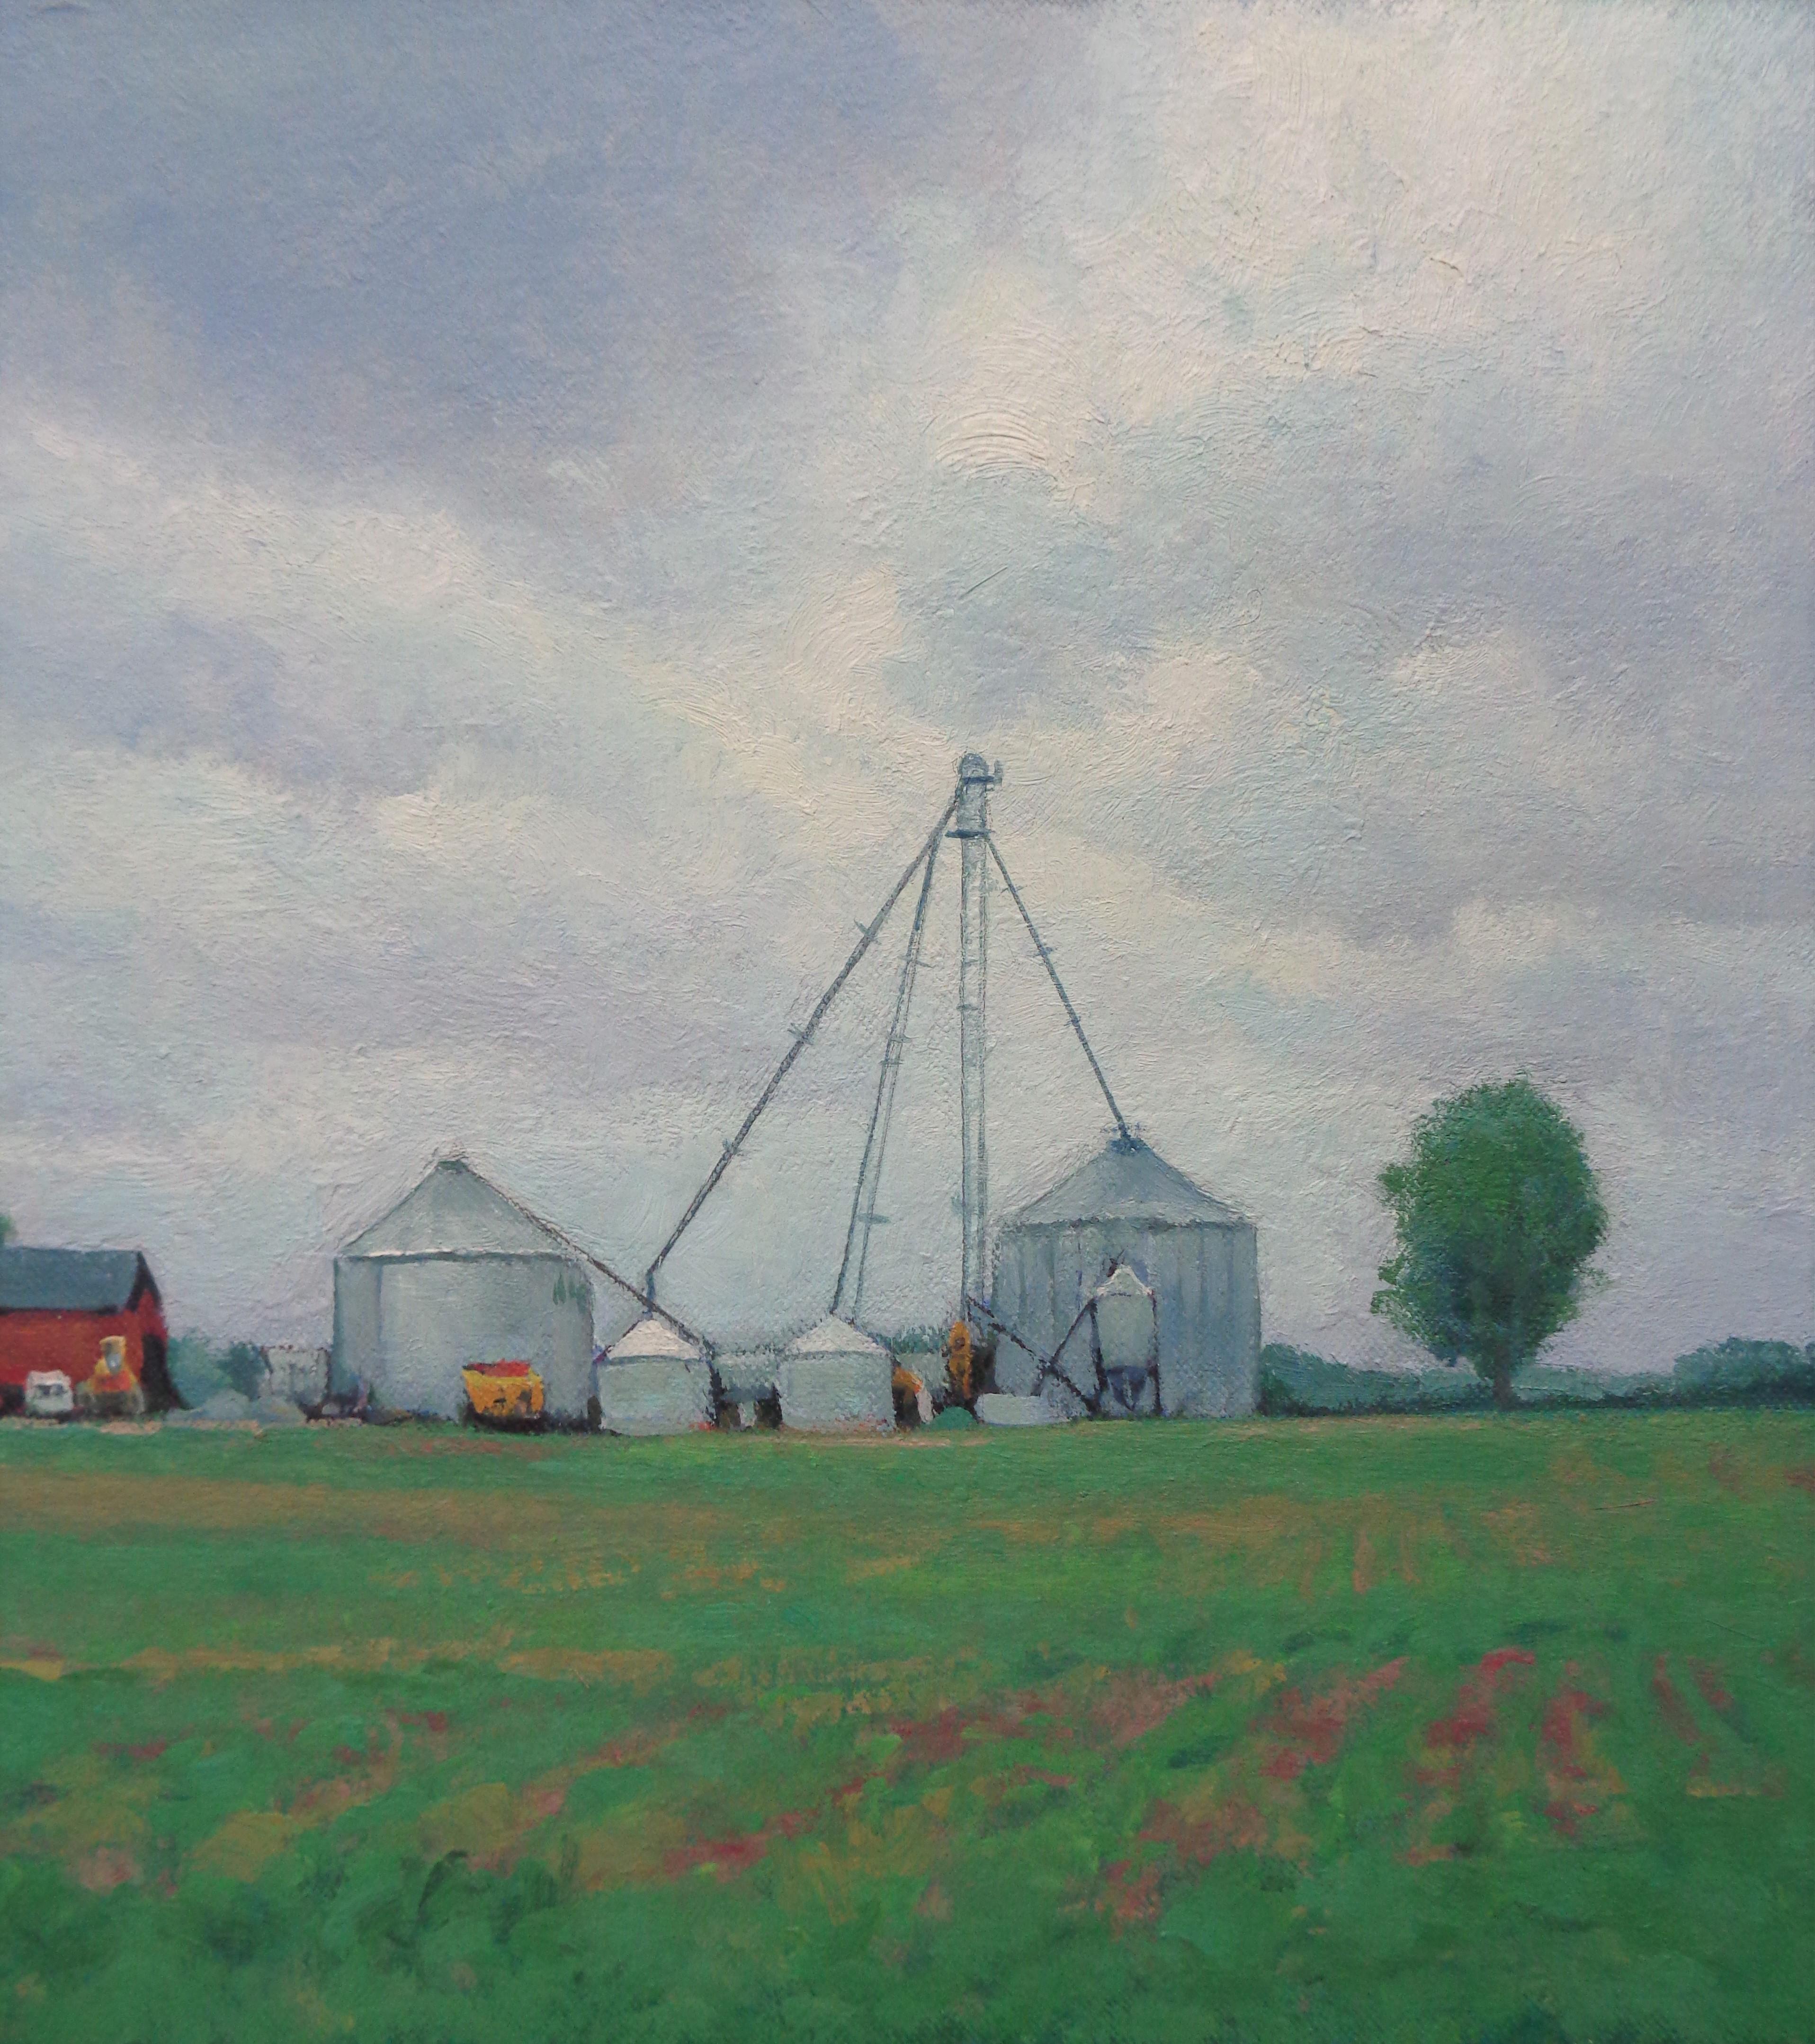  Impressionistic Rural Farm Award Winner Landscape Oil Painting Michael Budden  For Sale 3